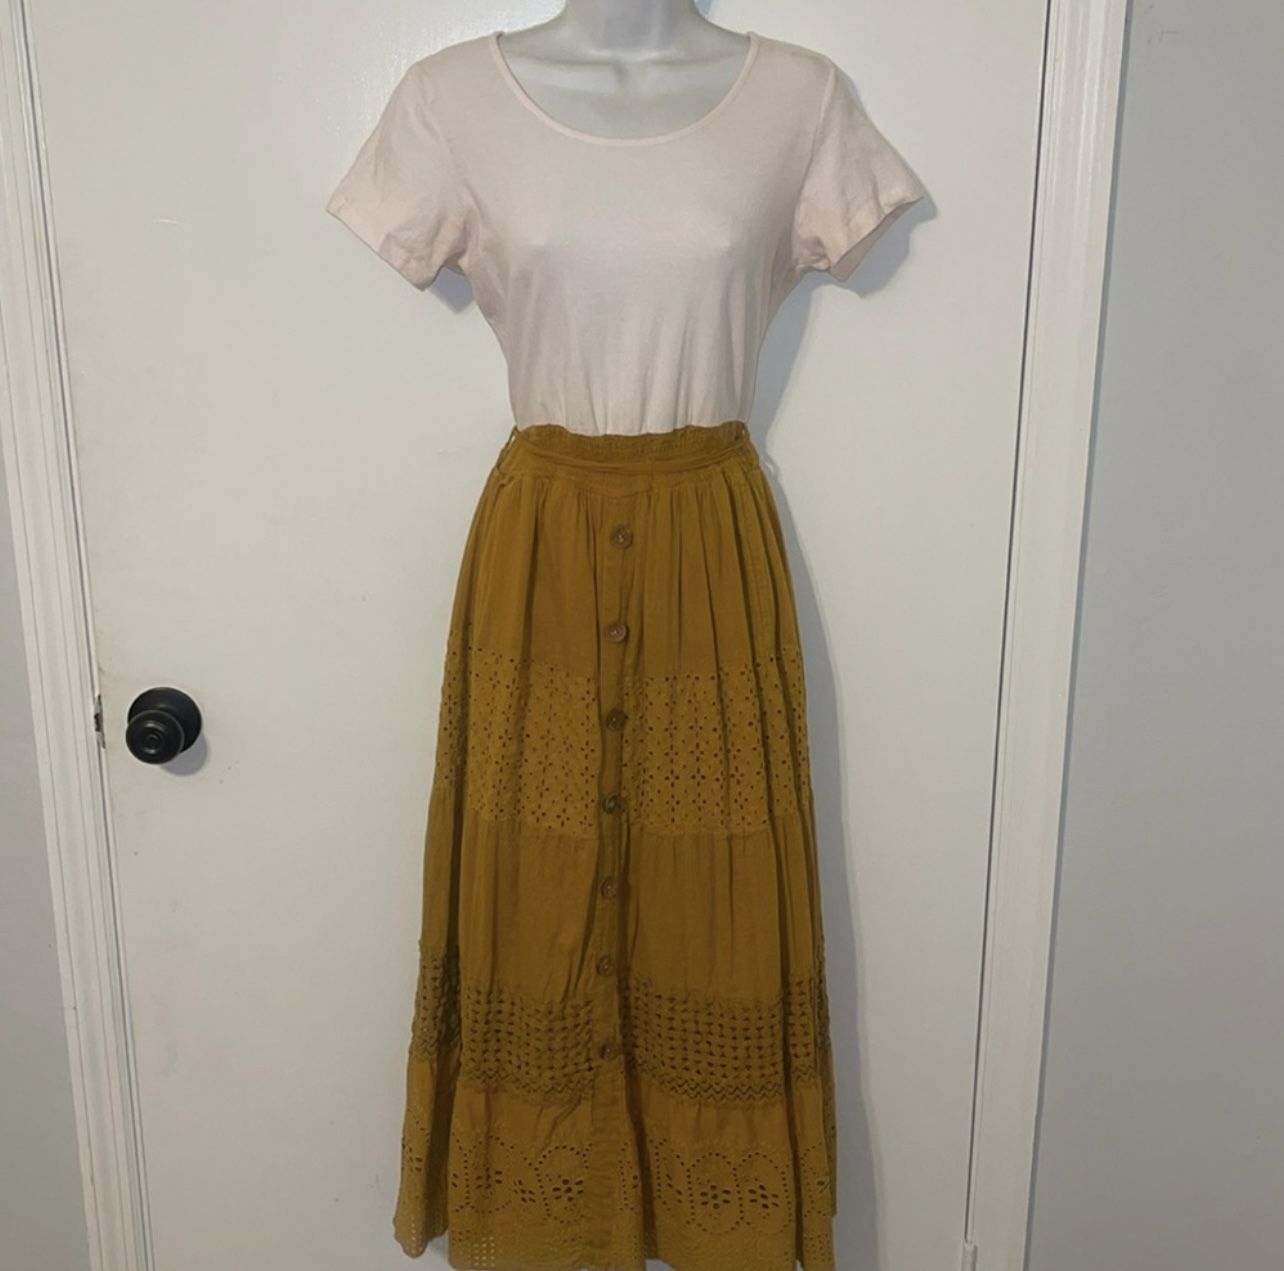 Bundle Deal Dresses, Shirts, Skirt & Onesie